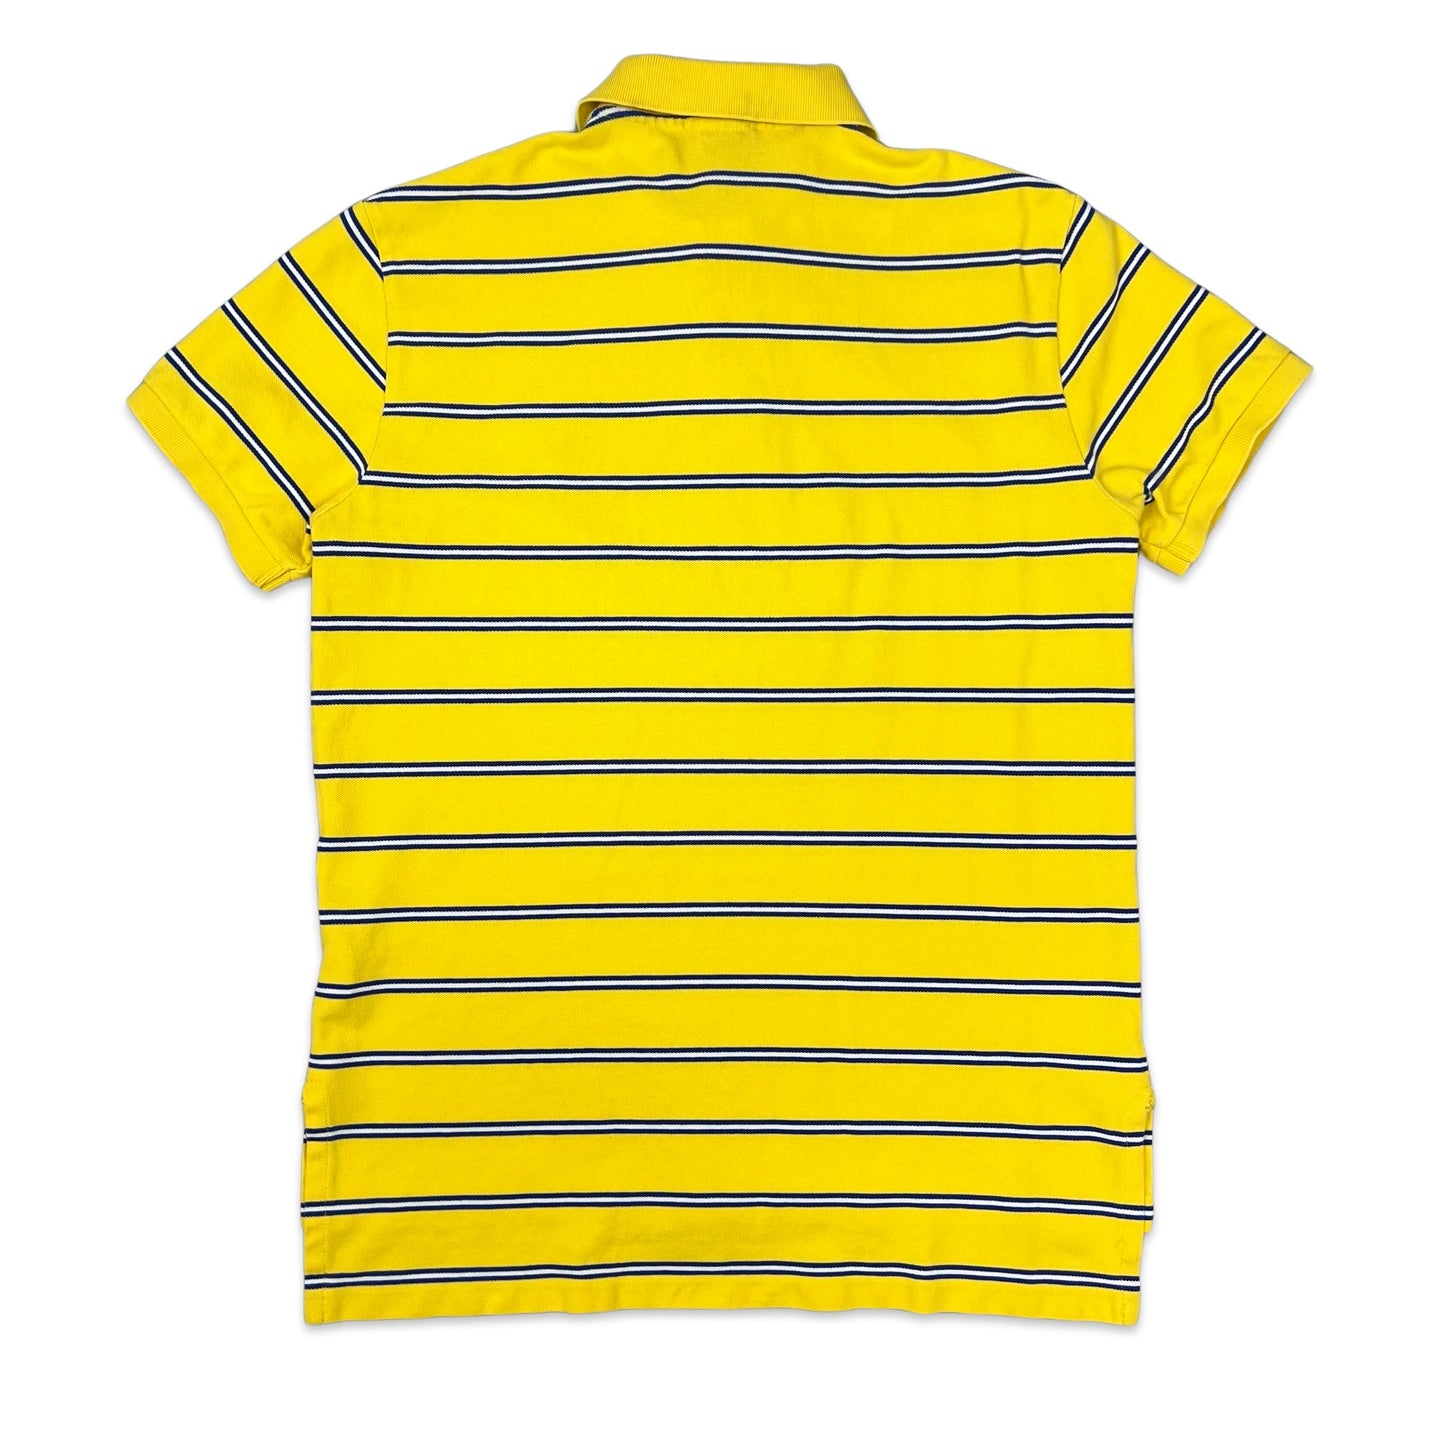 Vintage Ralph Lauren Yellow & Blue Striped Polo Shirt XS S